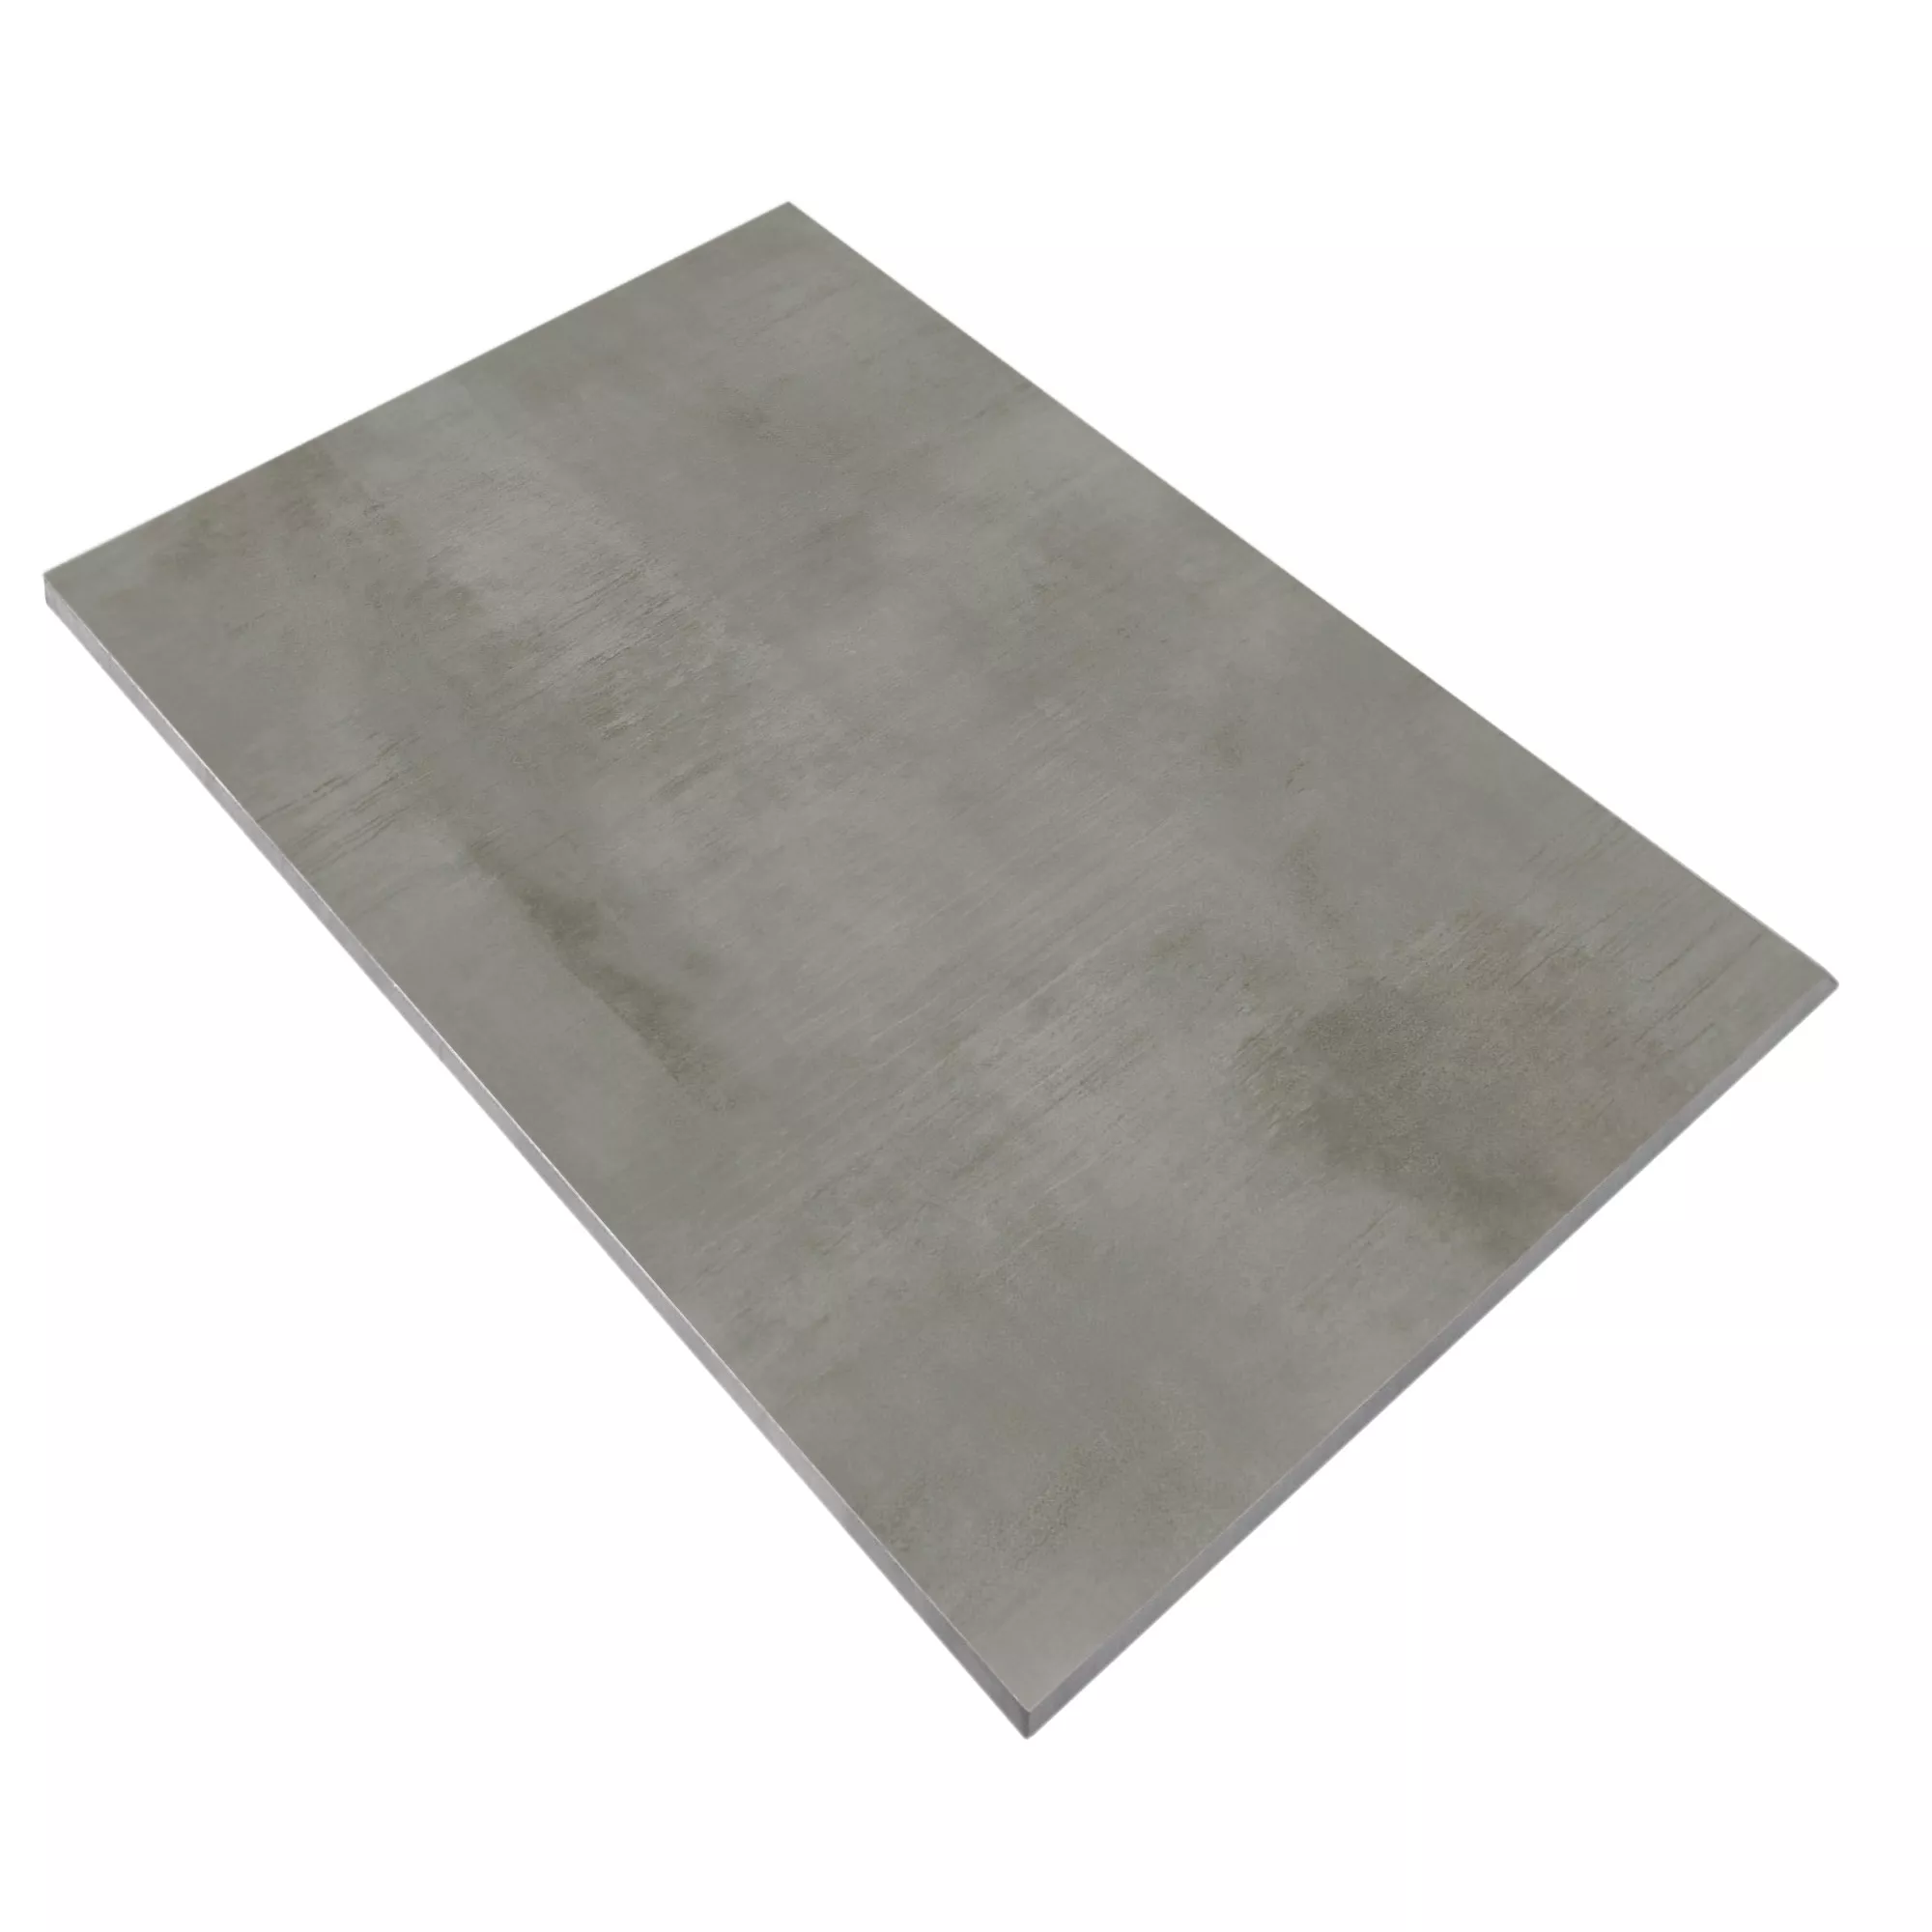 Sample Floor Tiles Tycoon Beton Optic R10 Platinum 30x60cm